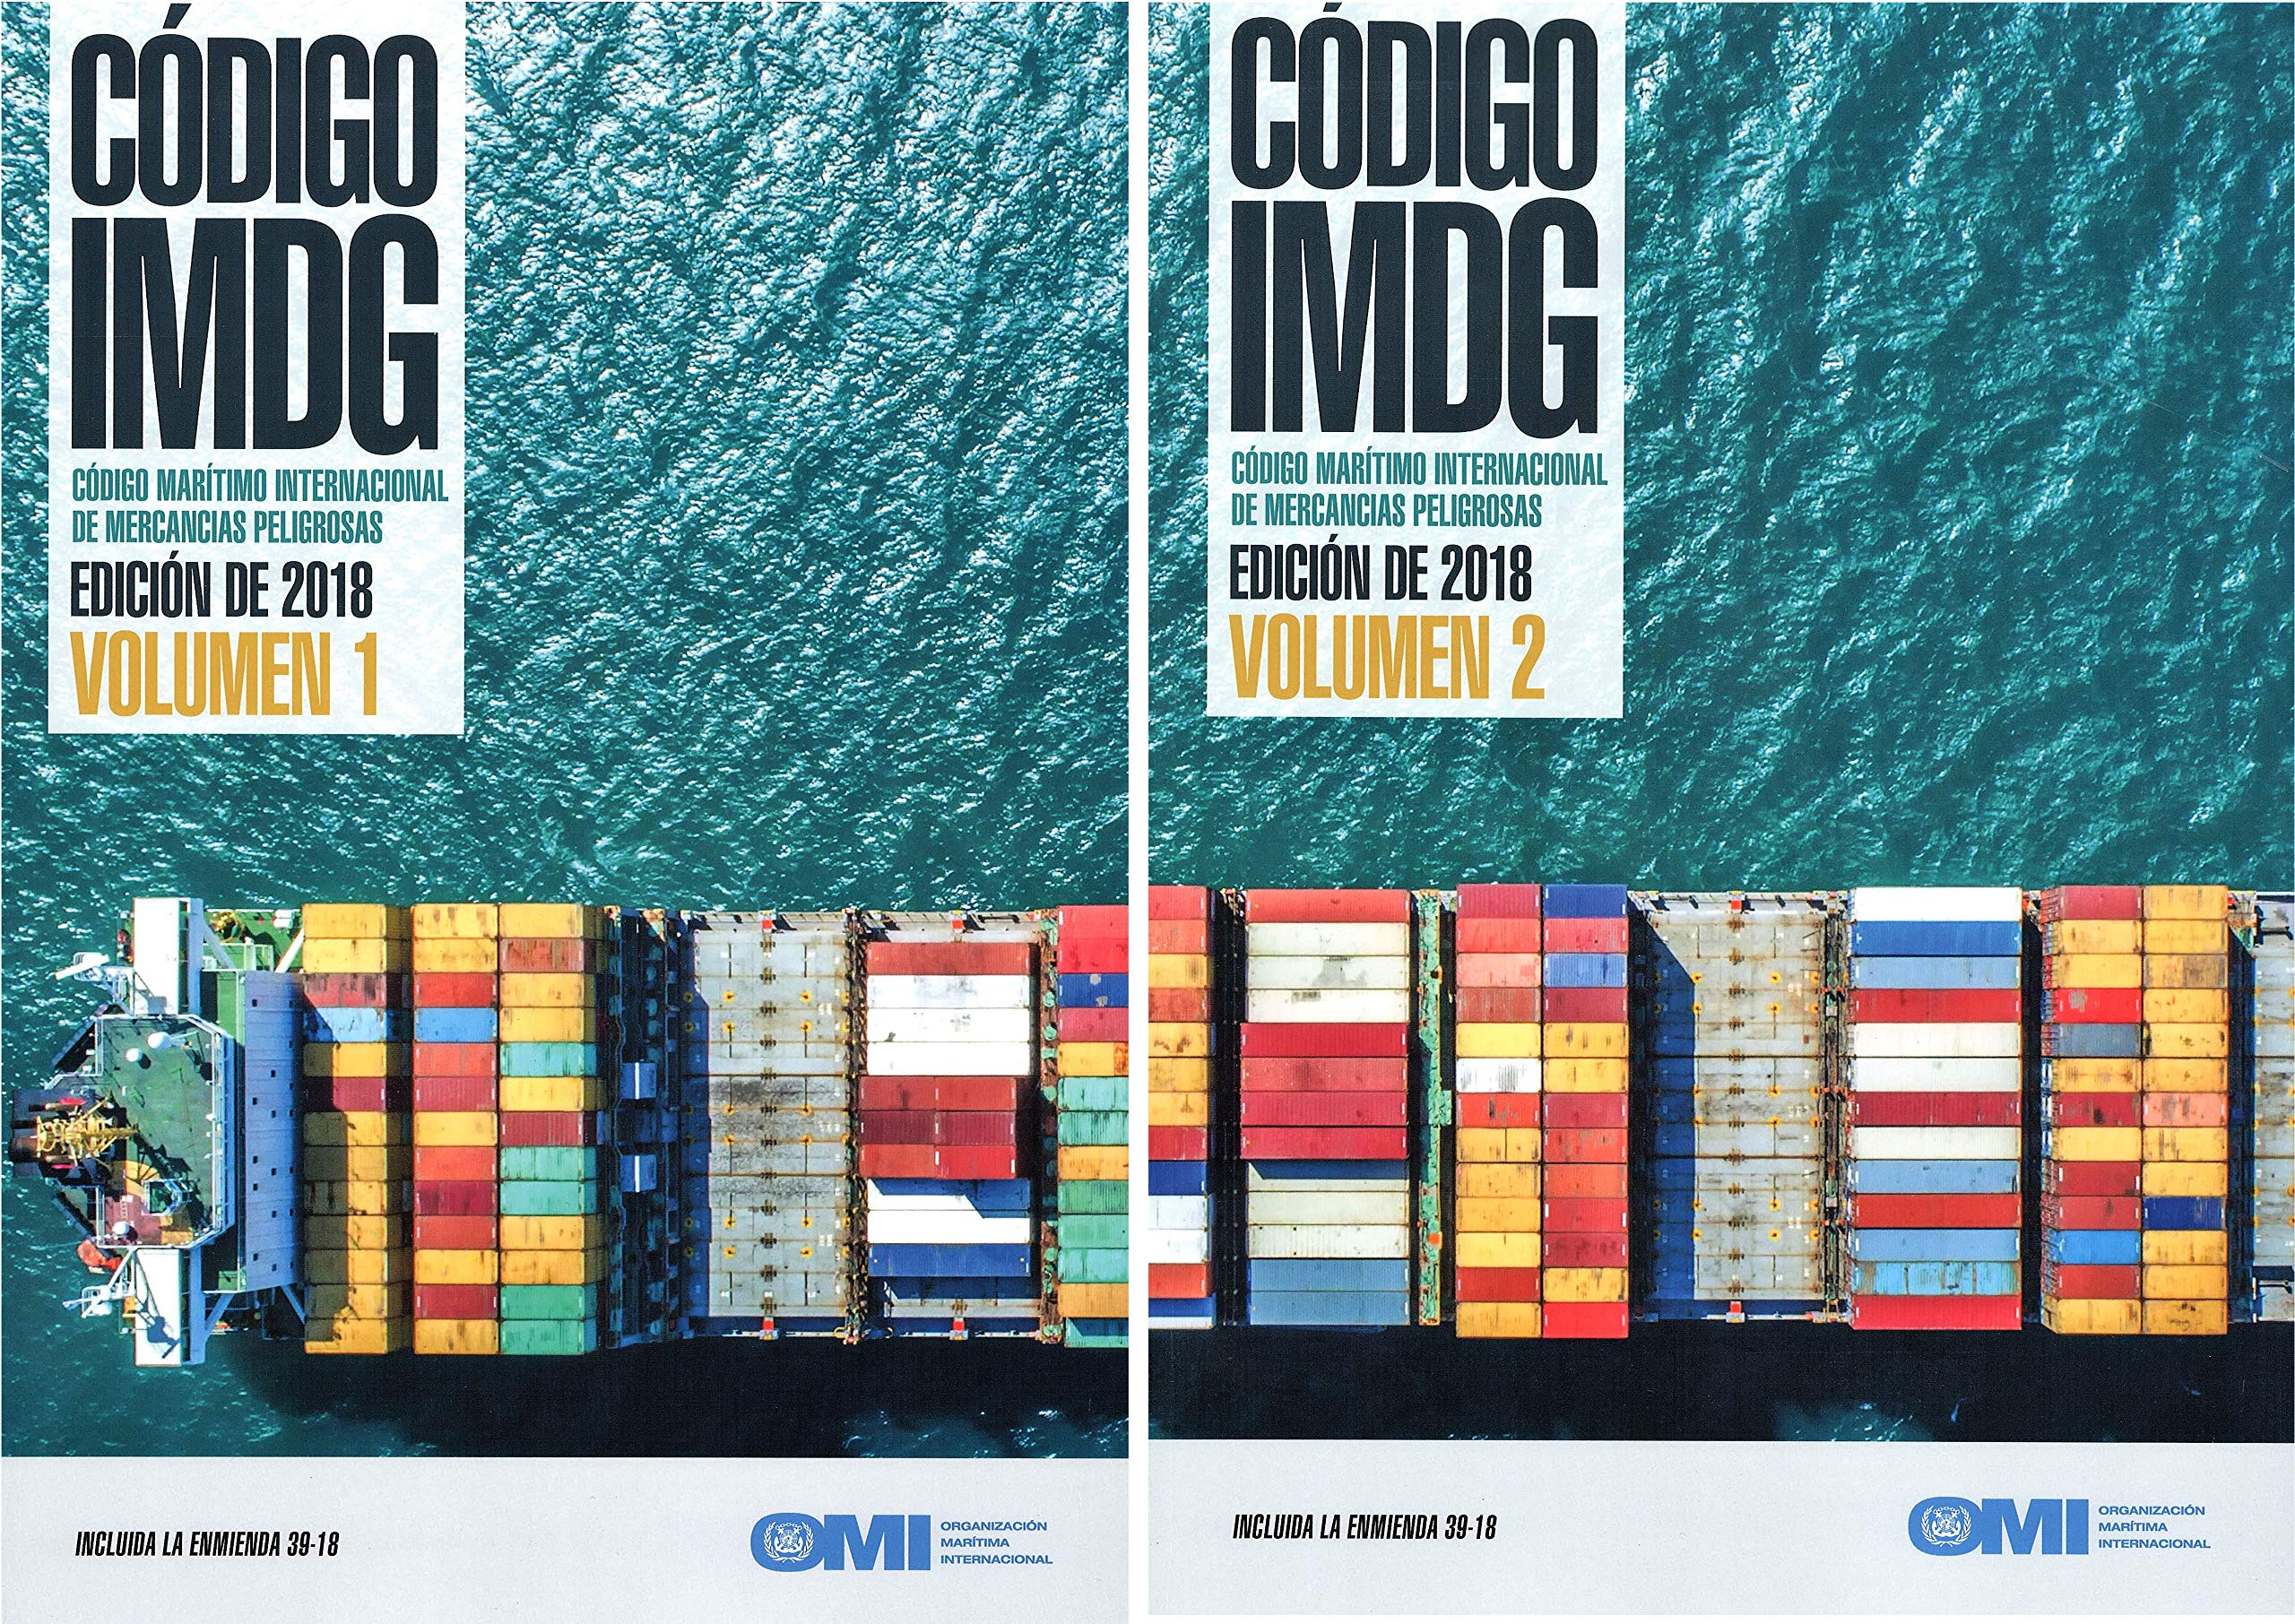 Imdg code 2012 edition free download